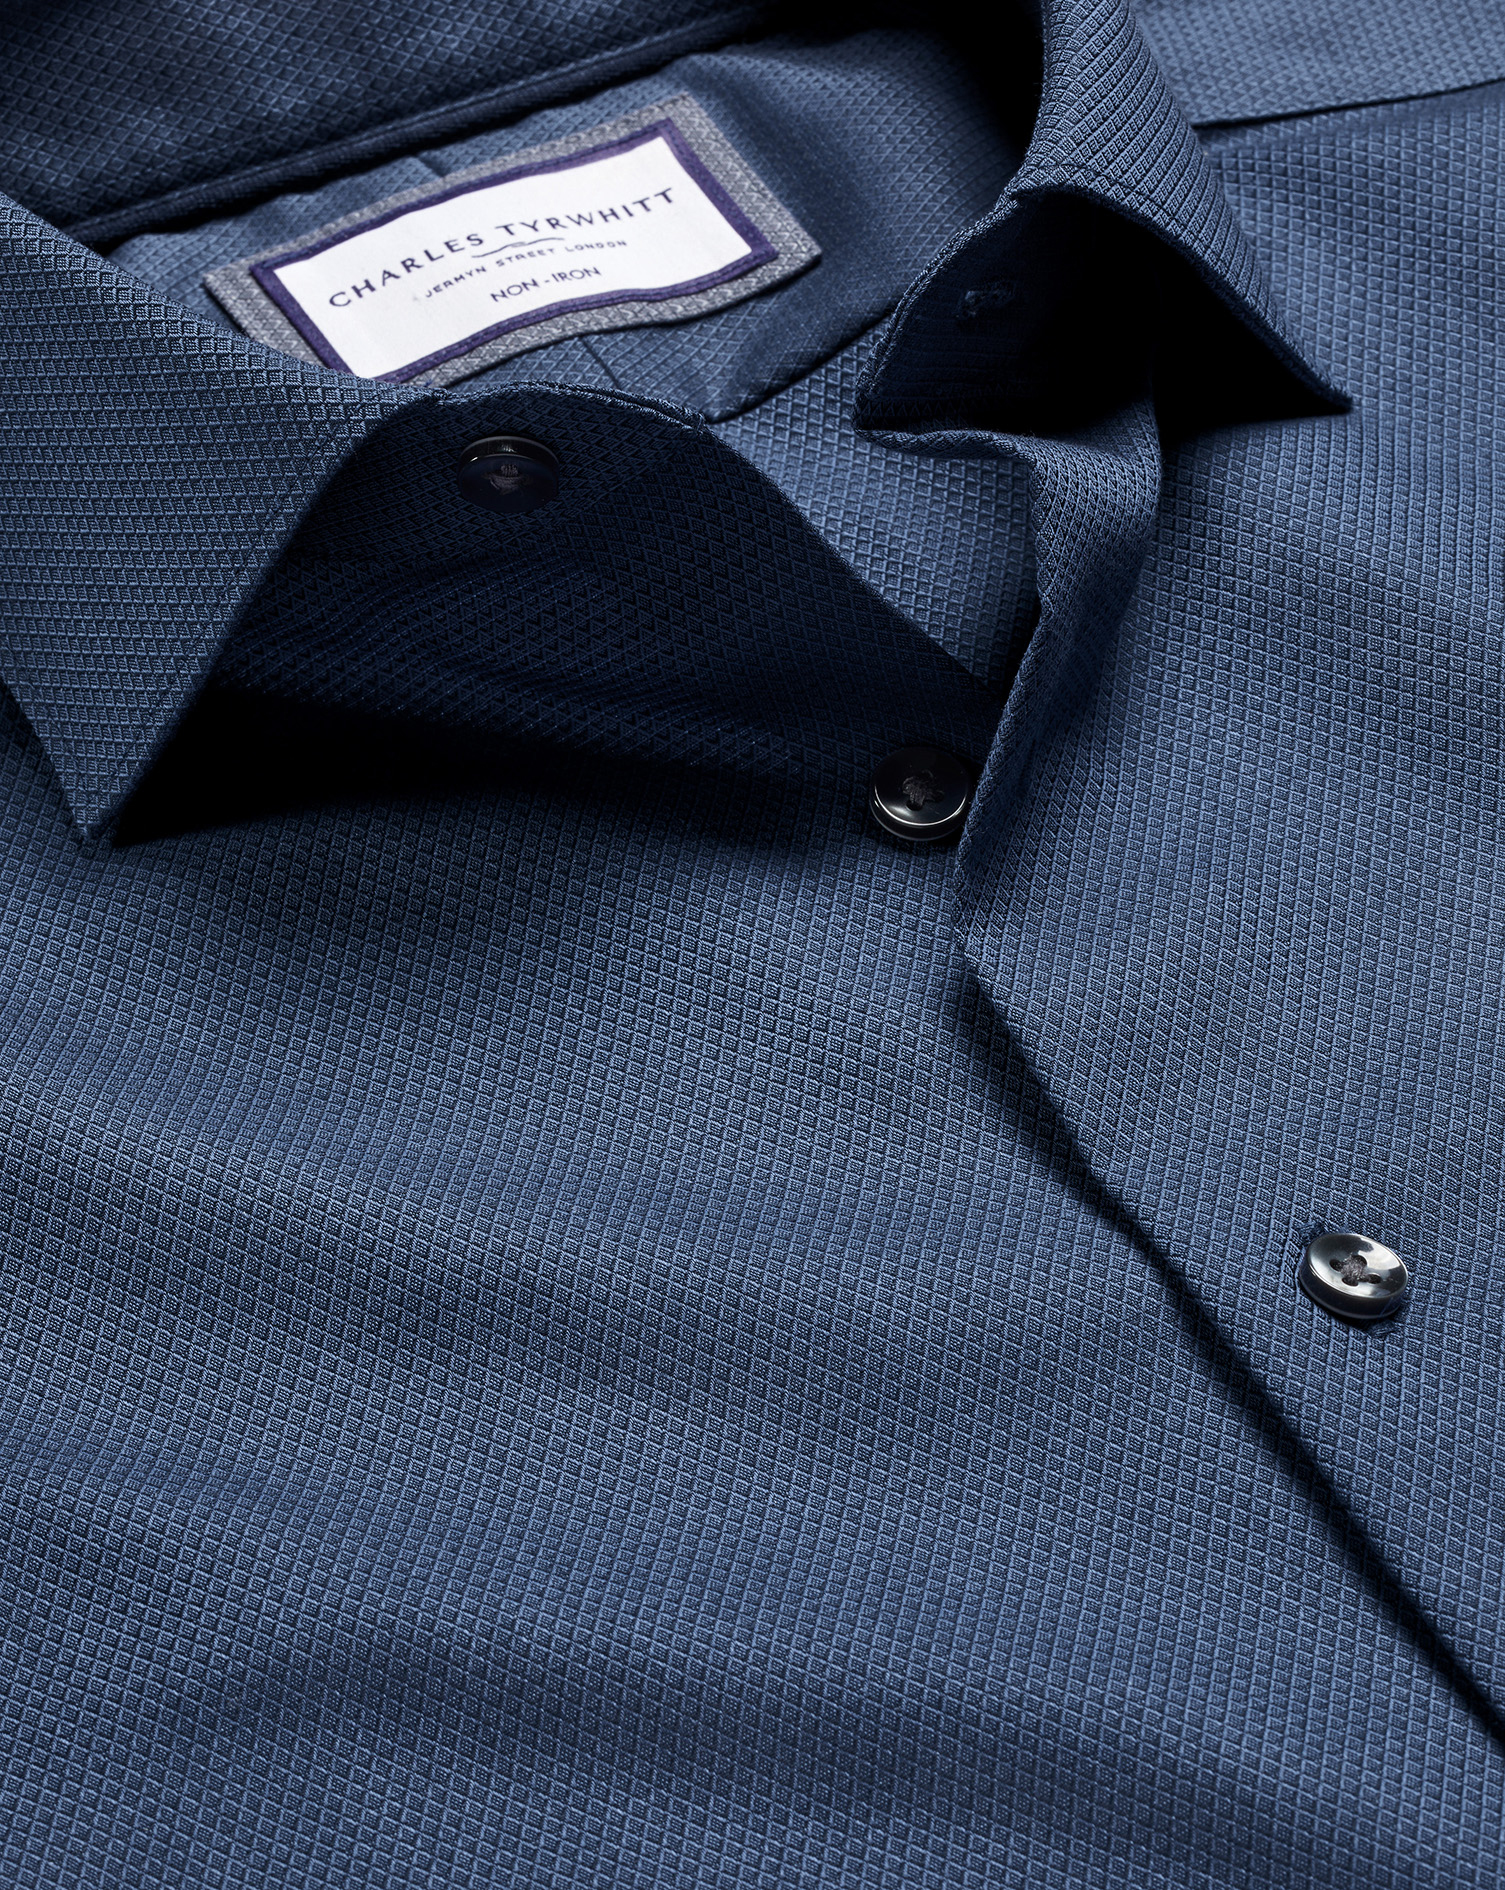 Men's Charles Tyrwhitt Non-Iron Diamond Stretch Texture Dress Shirt - Denim Blue Single Cuff Size 15